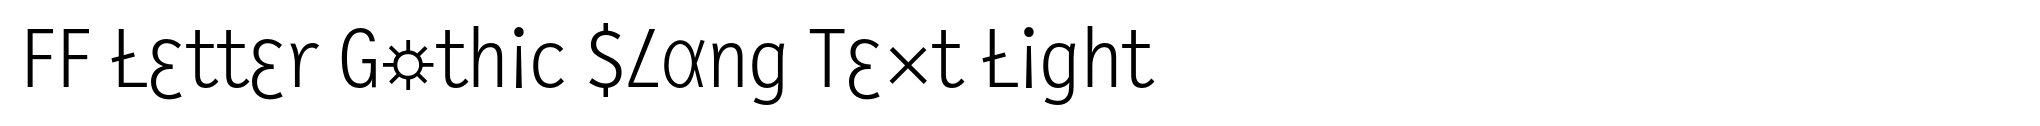 FF Letter Gothic Slang Text Light image